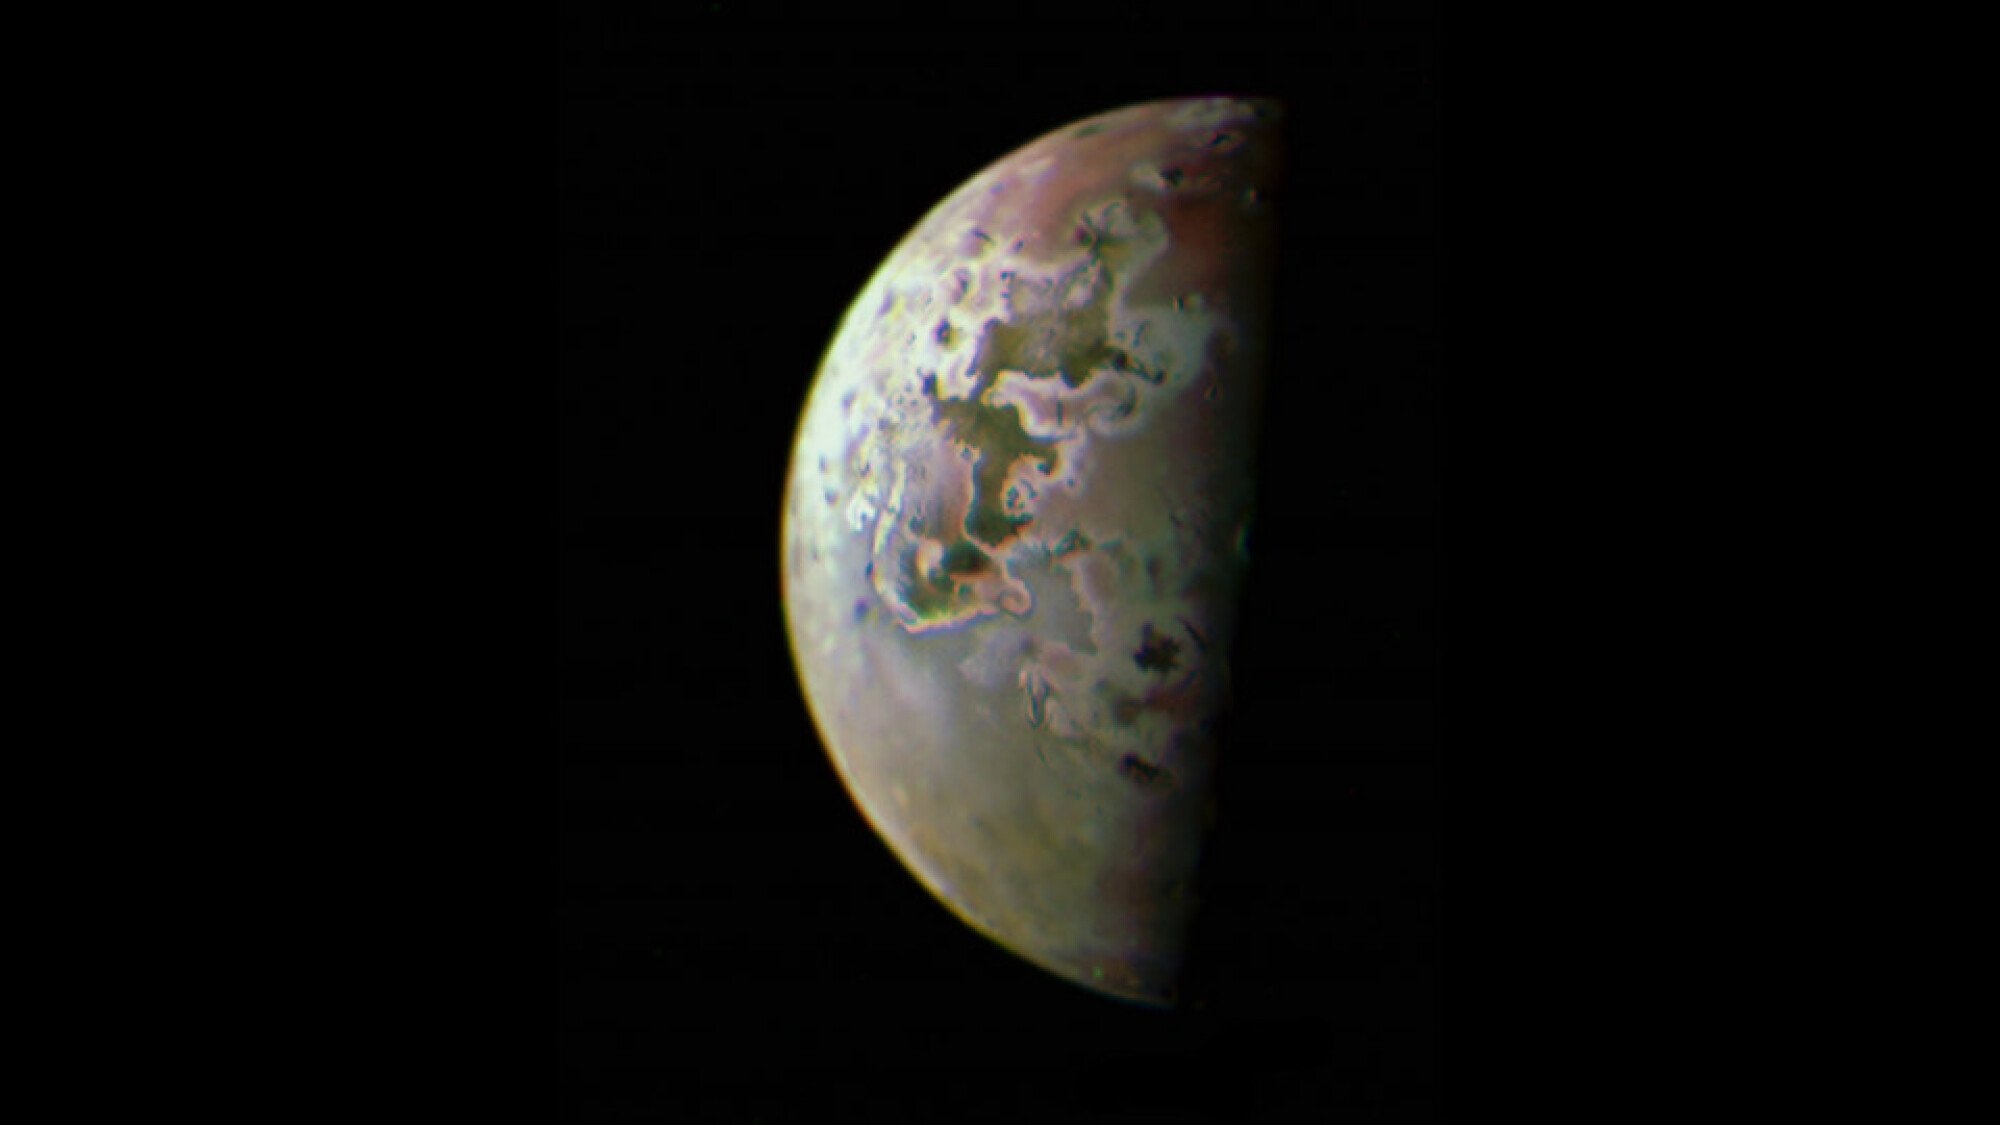 NASA's Juno spacecraft captured this close view of Io on its 53rd orbit around Jupiter.